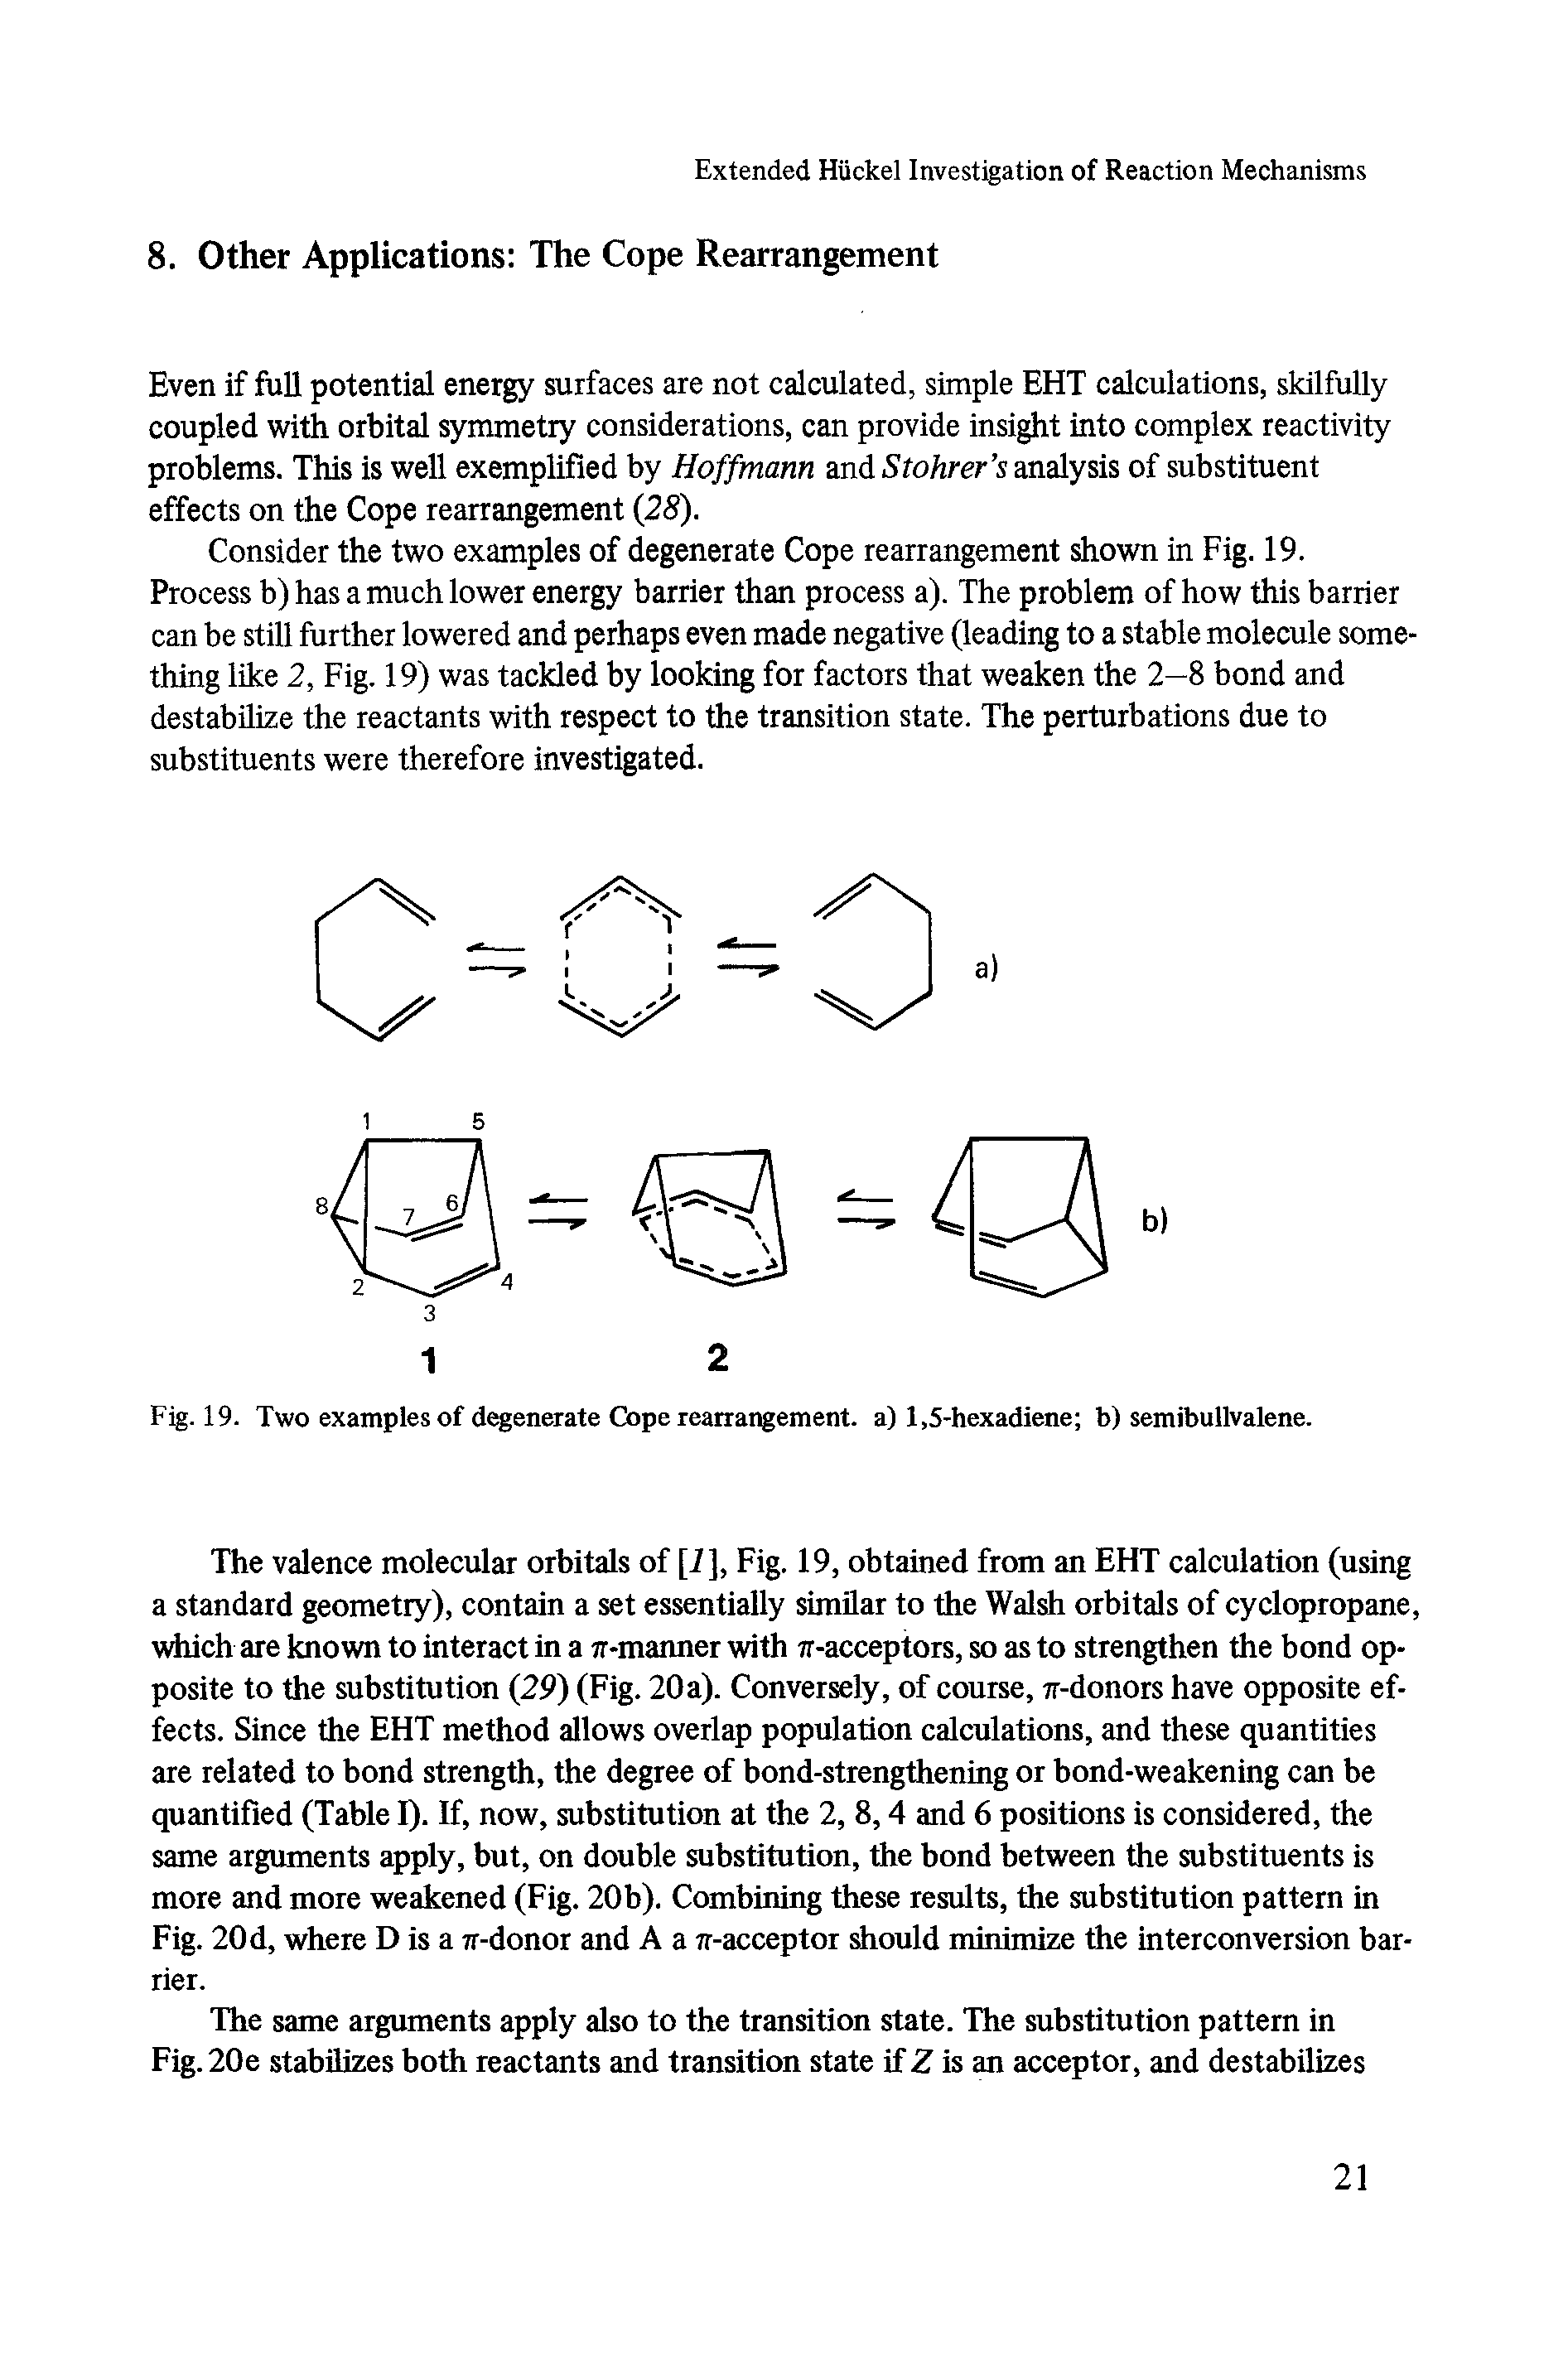 Fig. 19. Two examples of degenerate Cope rearrangement, a) 1,5-hexadiene b) semibullvalene.